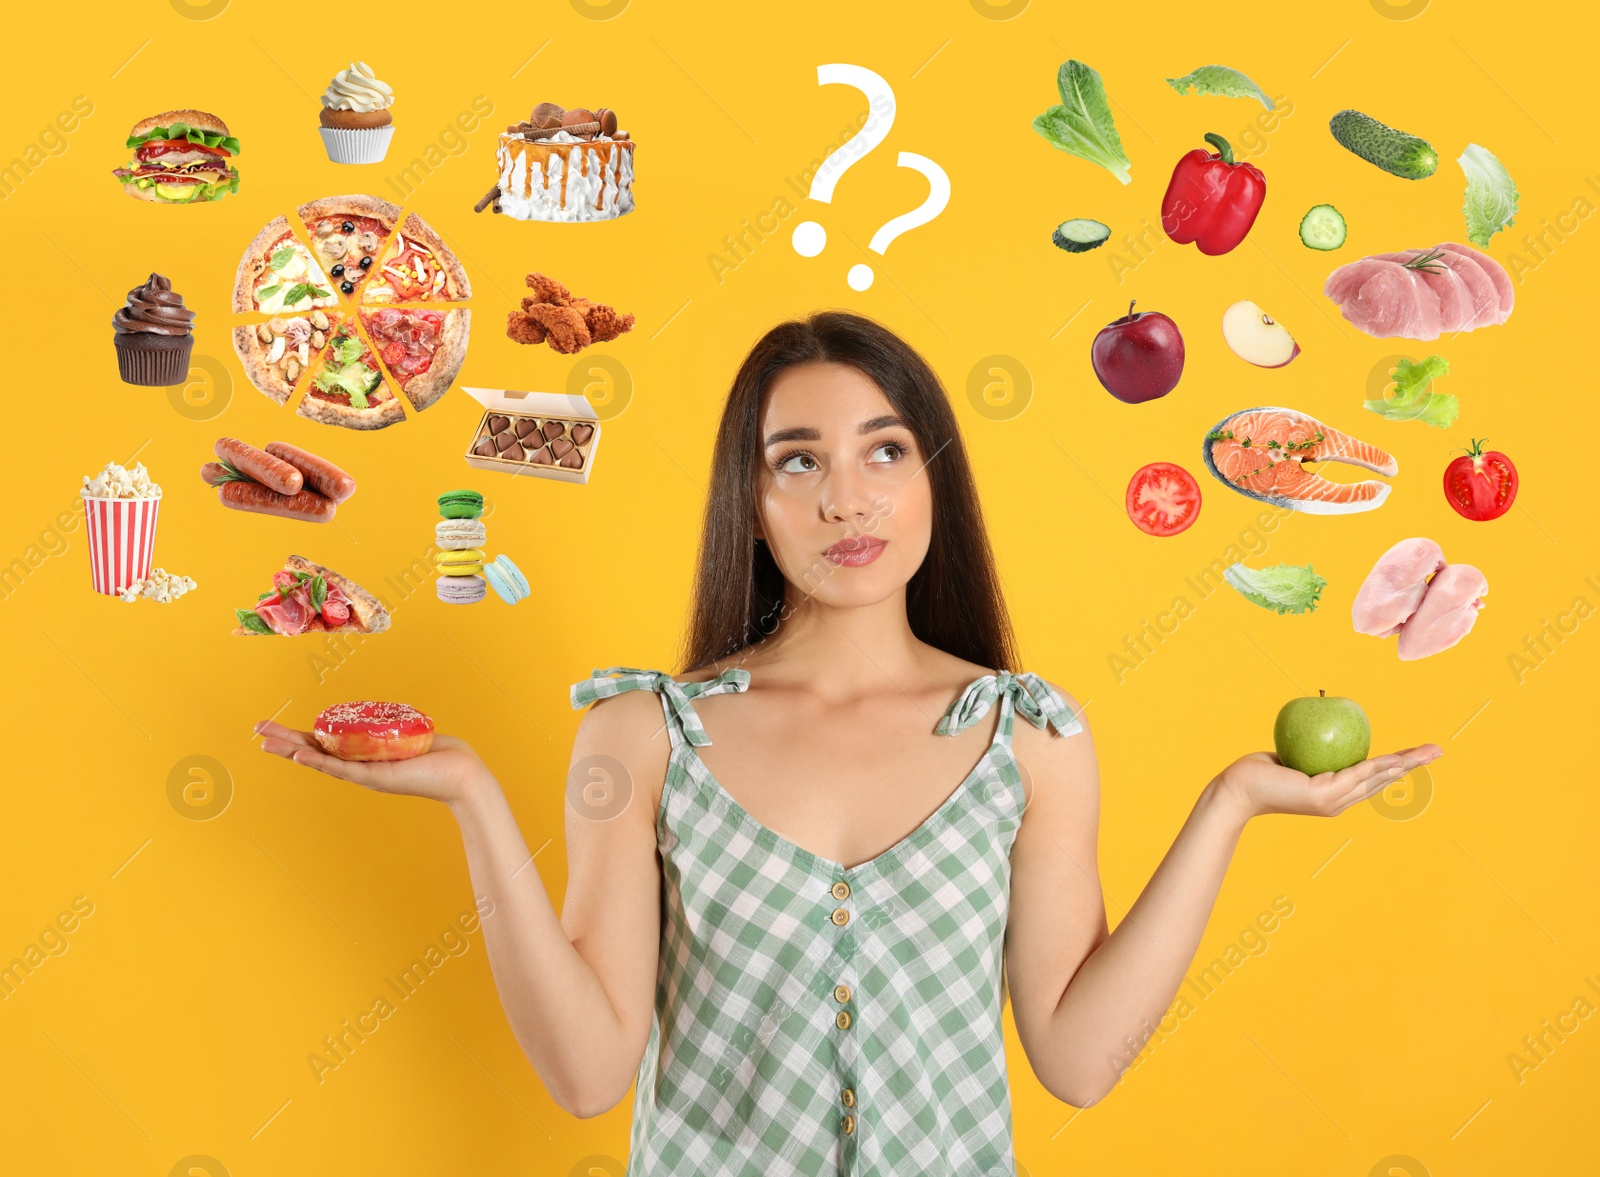 Image of Doubtful woman choosing between between healthy and unhealthy food on yellow background